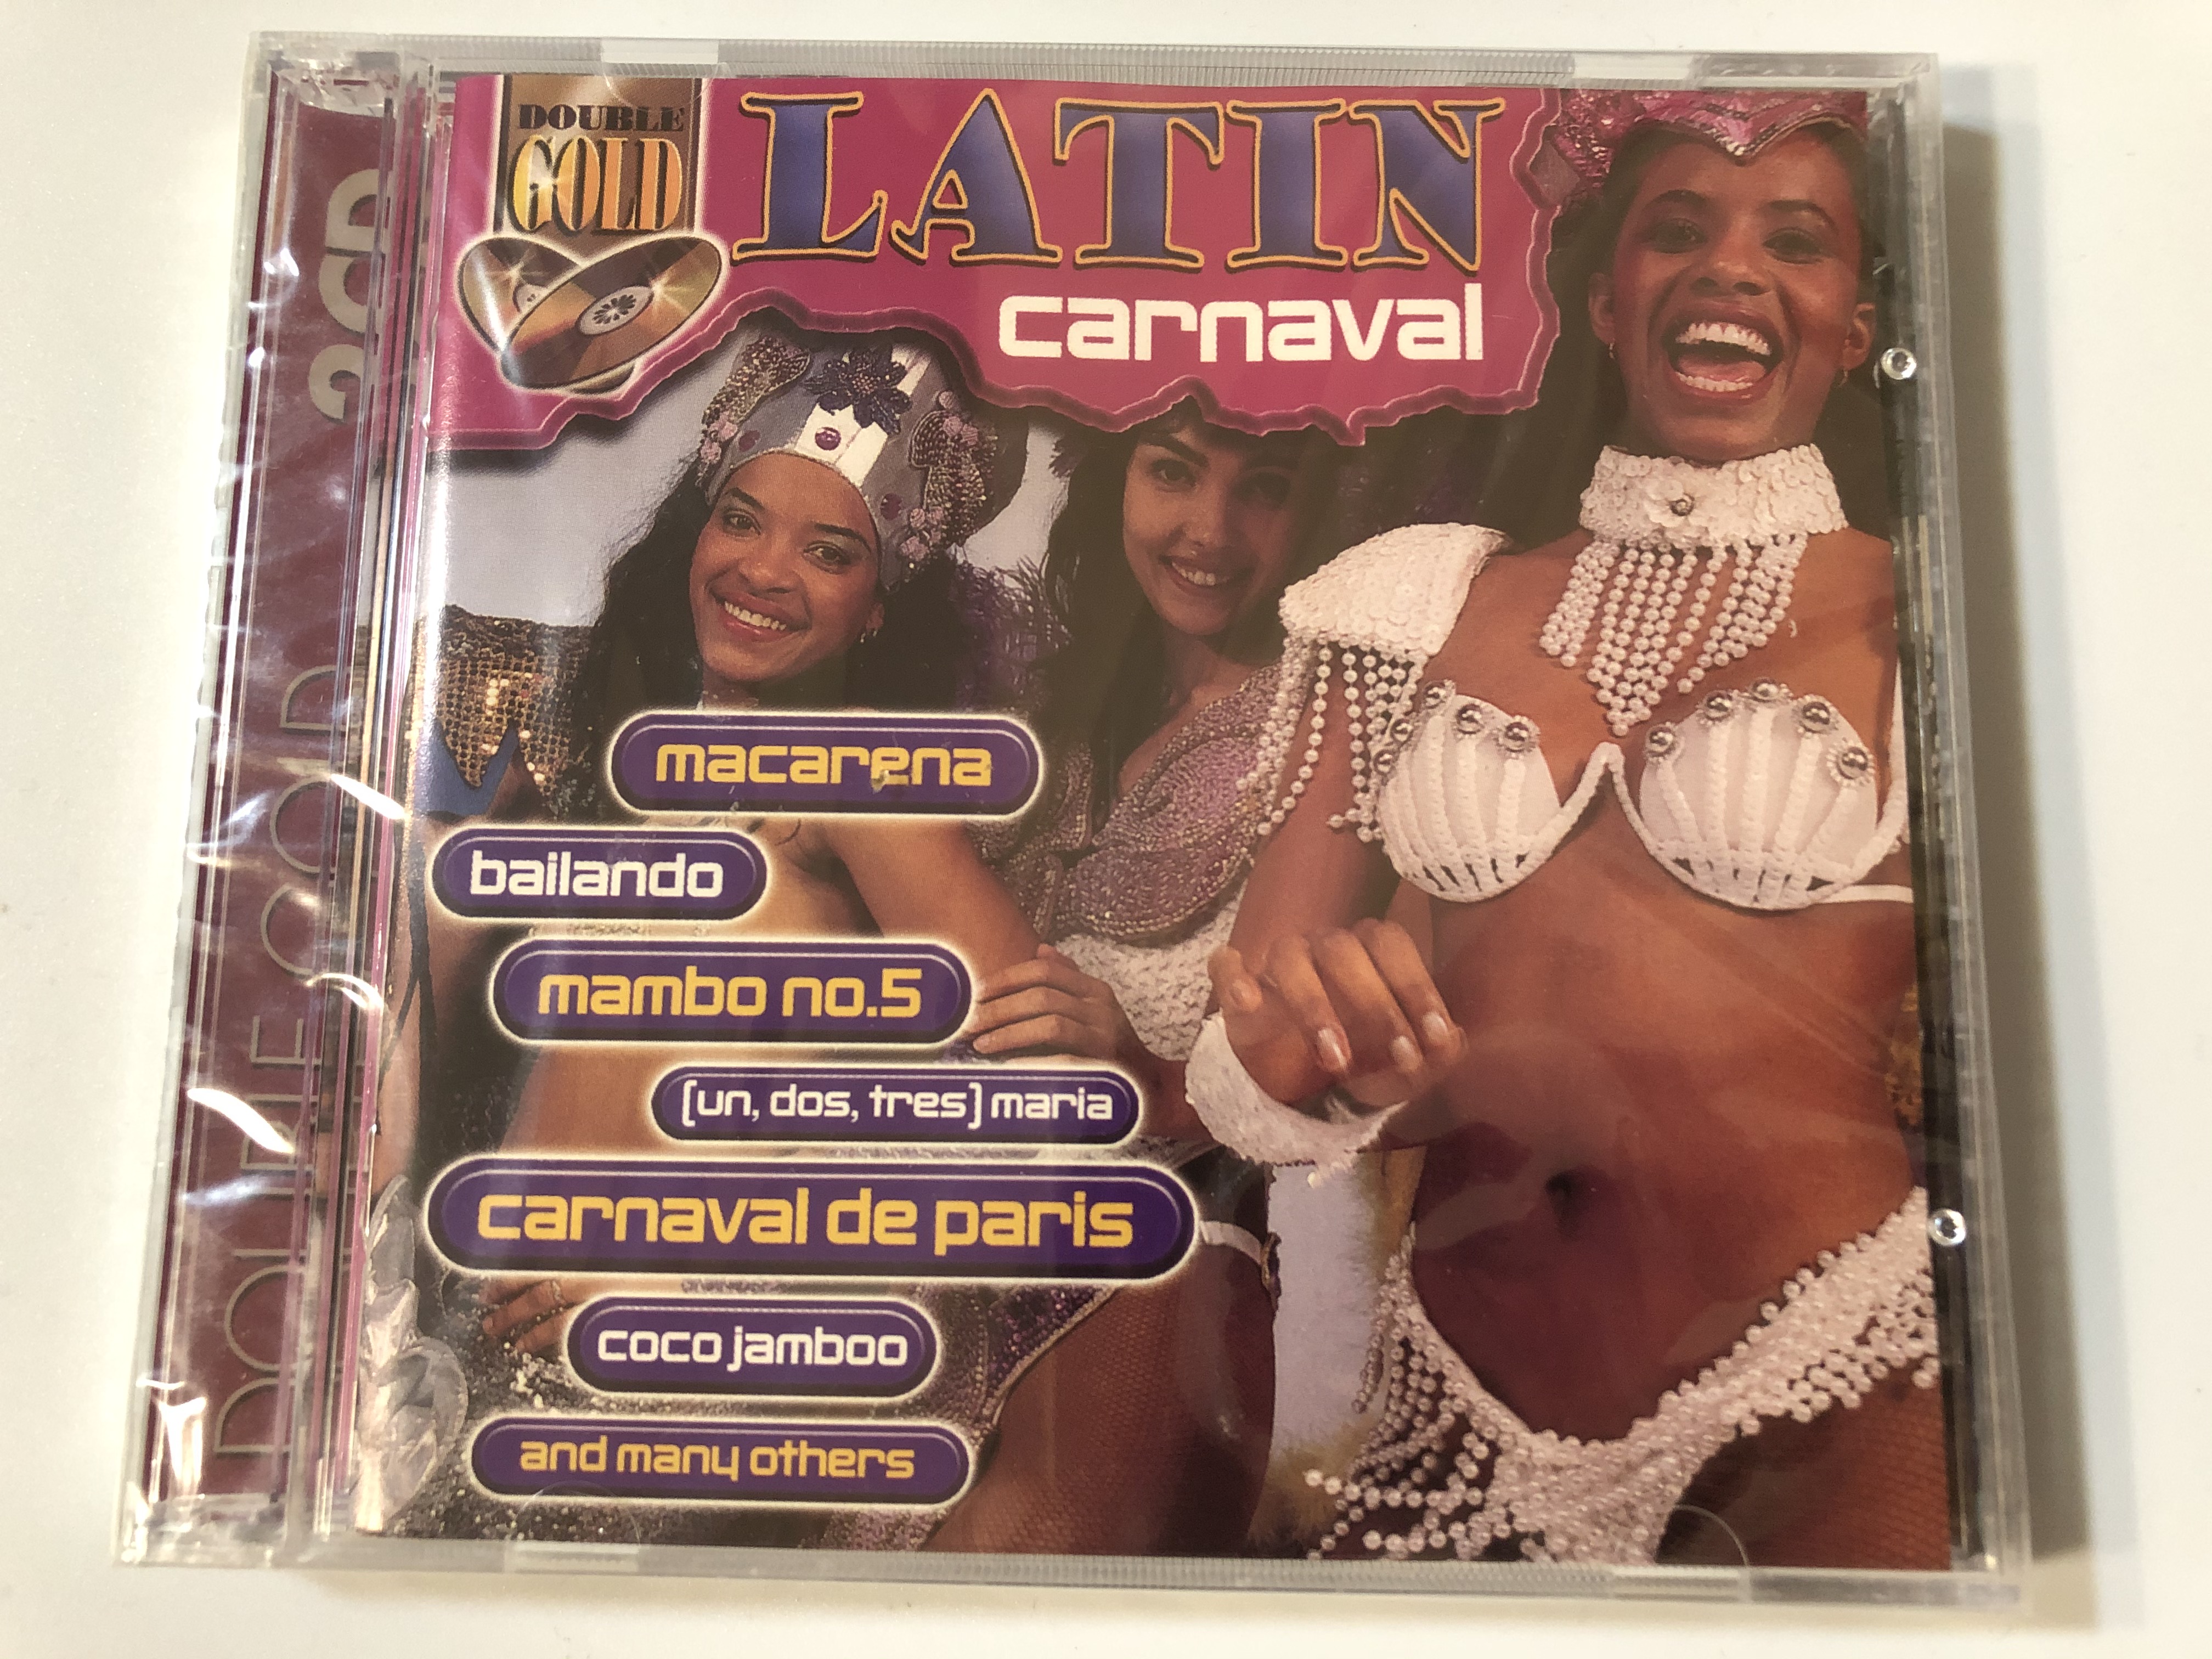 latin-carnaval-macarena-bailando-mambo-no.-5-un-dos-tres-maria-carnaval-de-paris-coco-jambo-and-many-others-double-gold-2x-audio-cd-1701692-1-.jpg